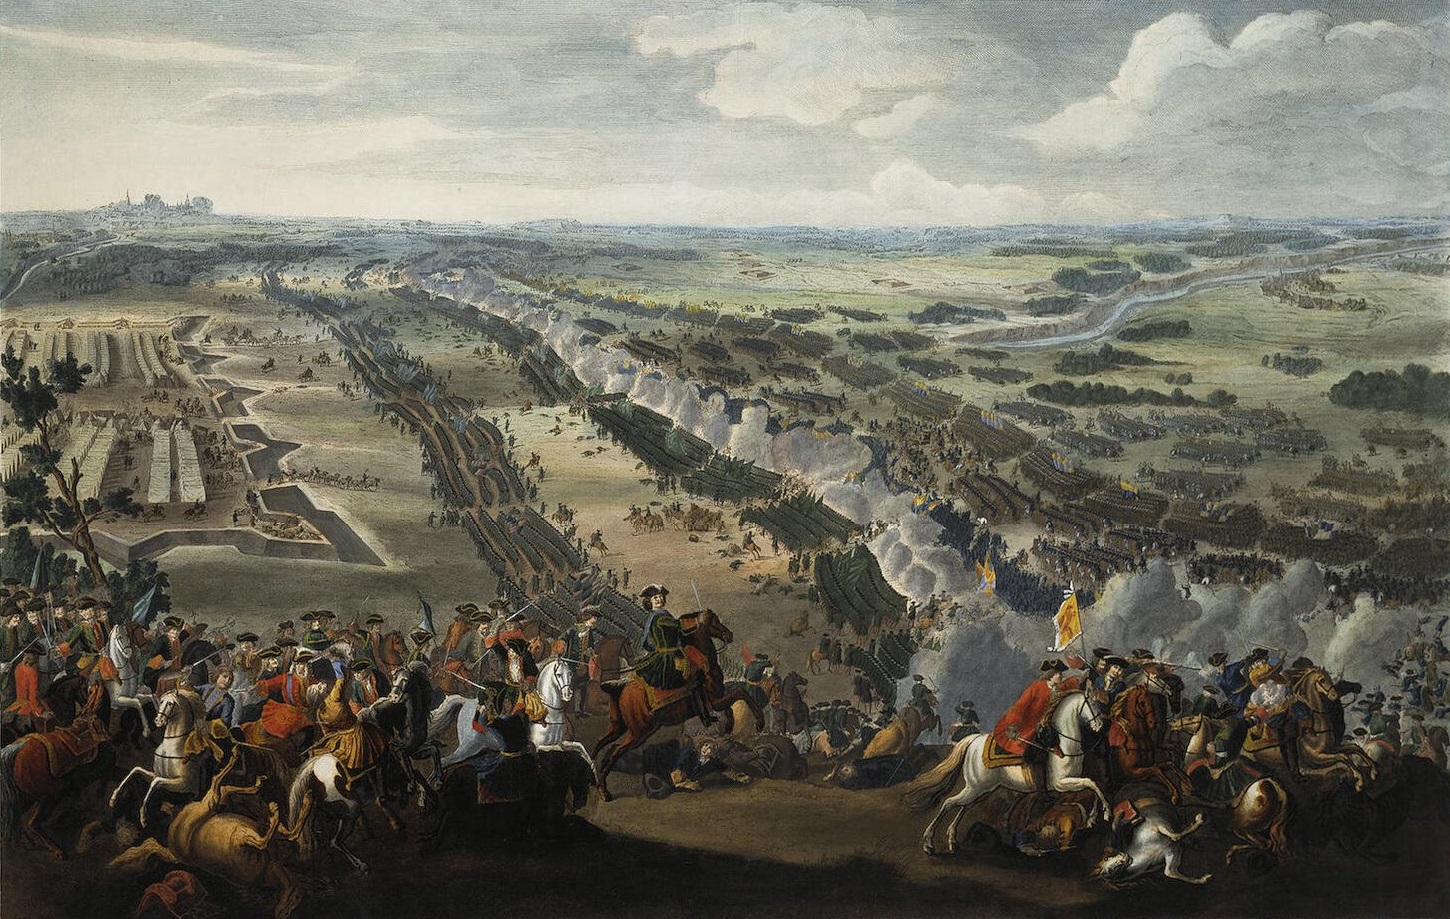 Battle of Poltava in 1709 in Ukraine image - Free stock photo ...